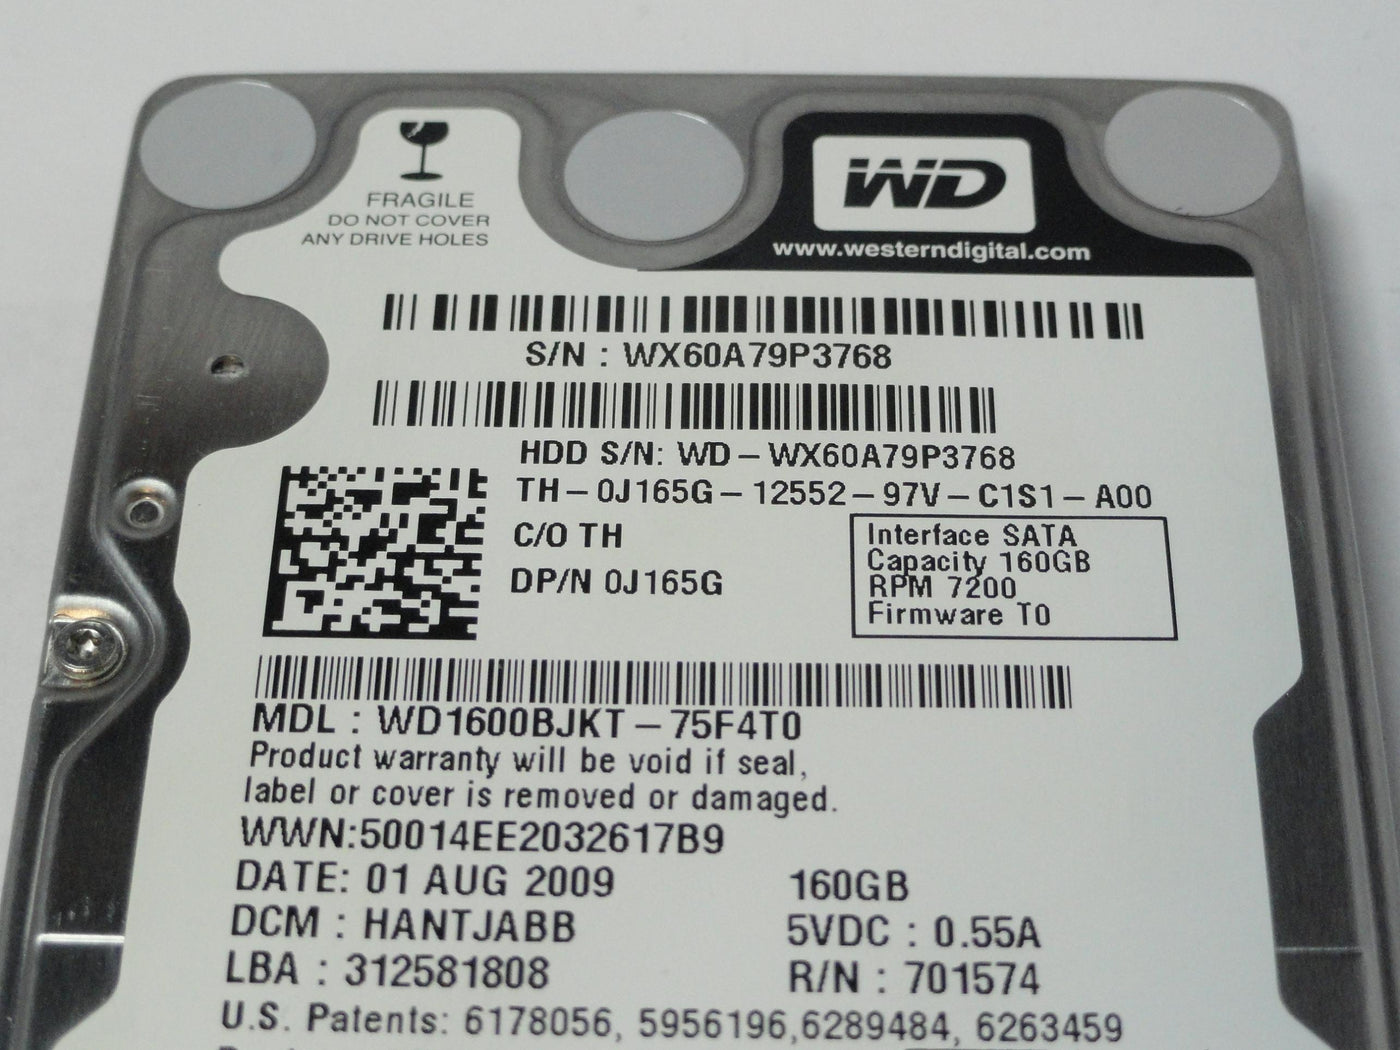 PR25963_WD1600BJKT-75F4T0_Western Digital Dell 160GB SATA 7200pm 2.5in HDD - Image2